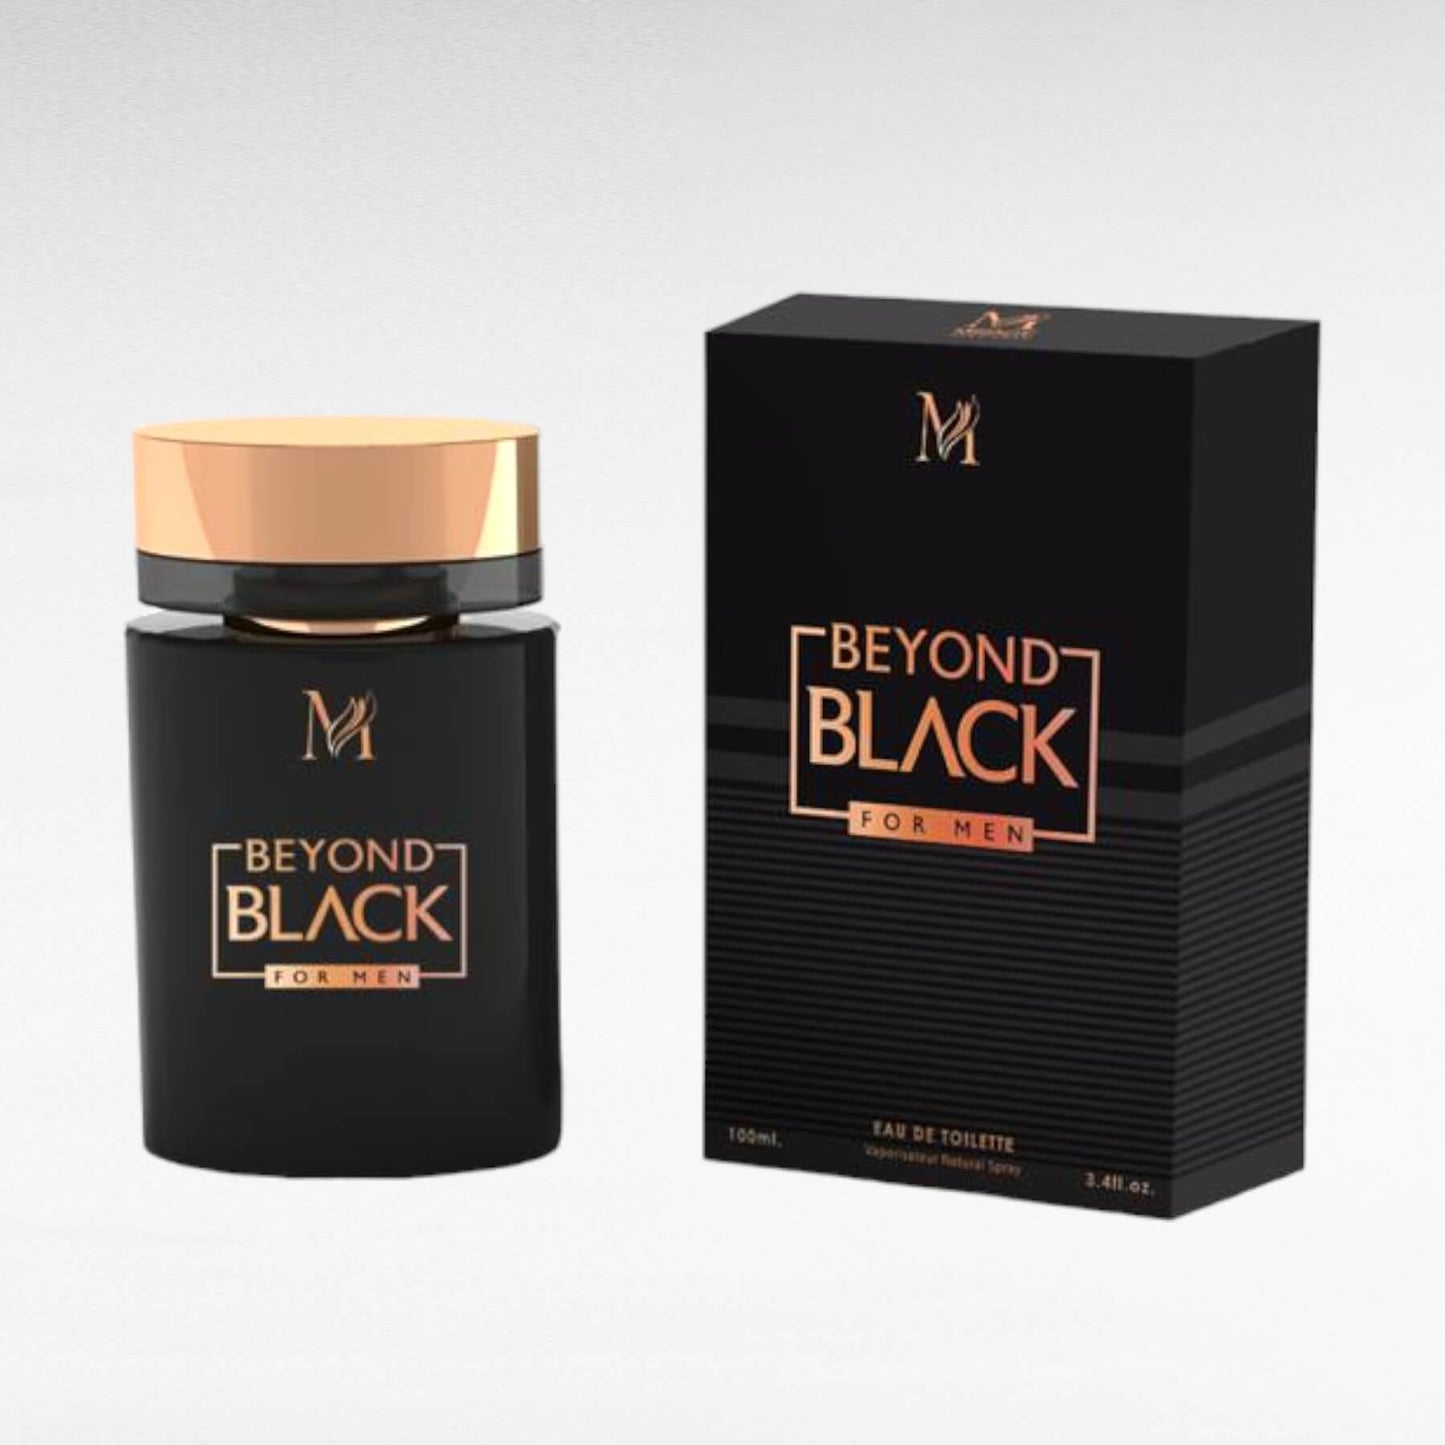 alt="Beyond Black marca Mirage - Fragrância masculina Beyond Black da marca Mirage"